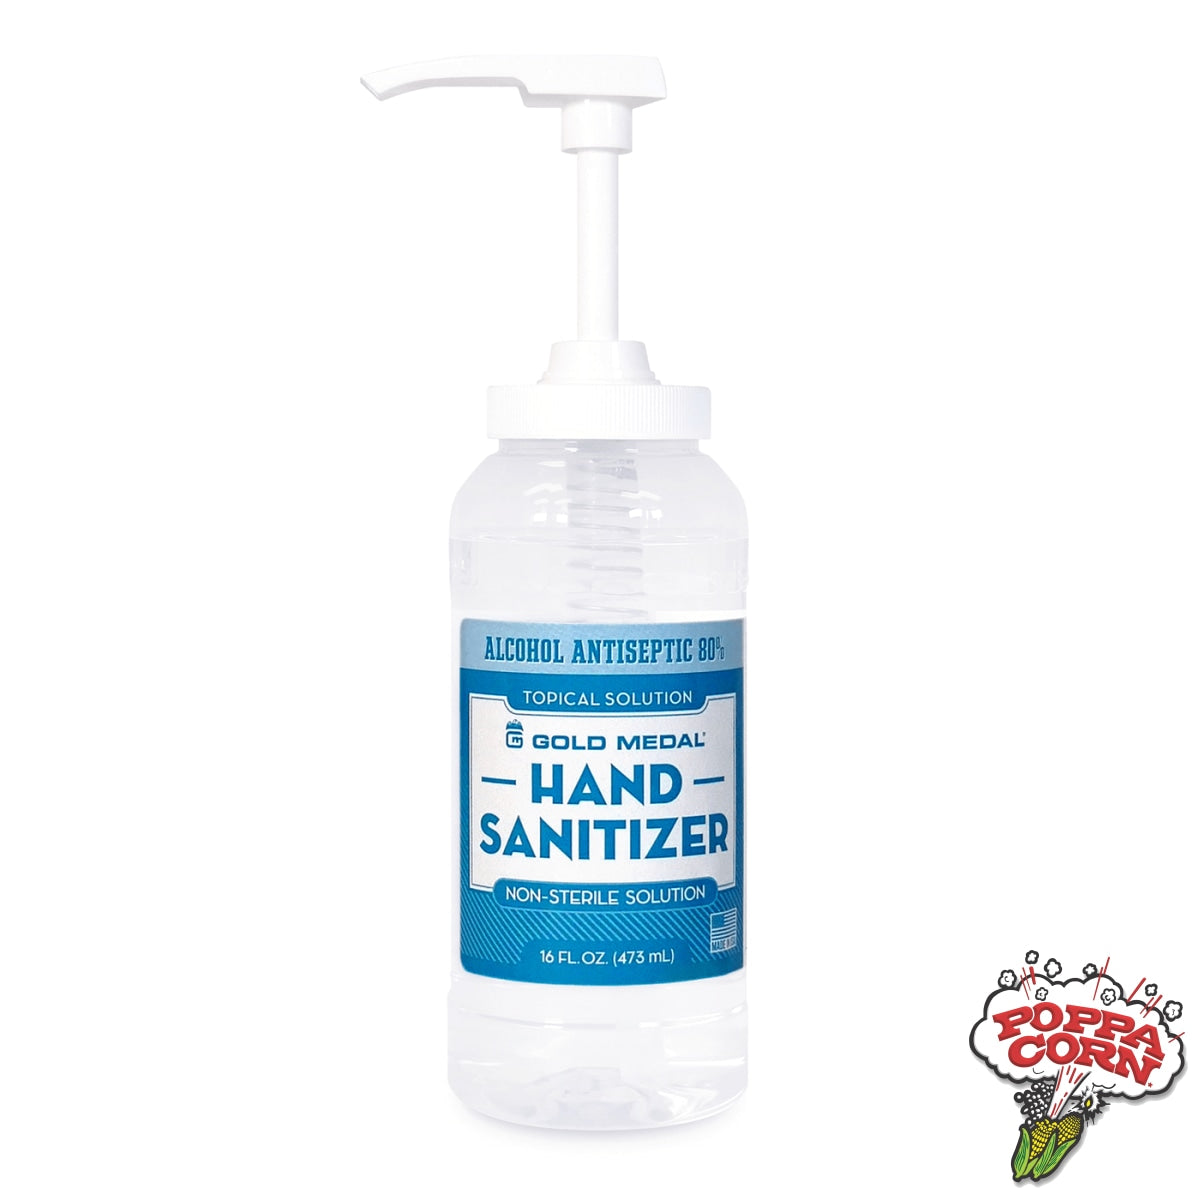 Hand Sanitizer (Alcohol Antiseptic 80%) 16-oz. Bottle w/Pump - Poppa Corn Corp